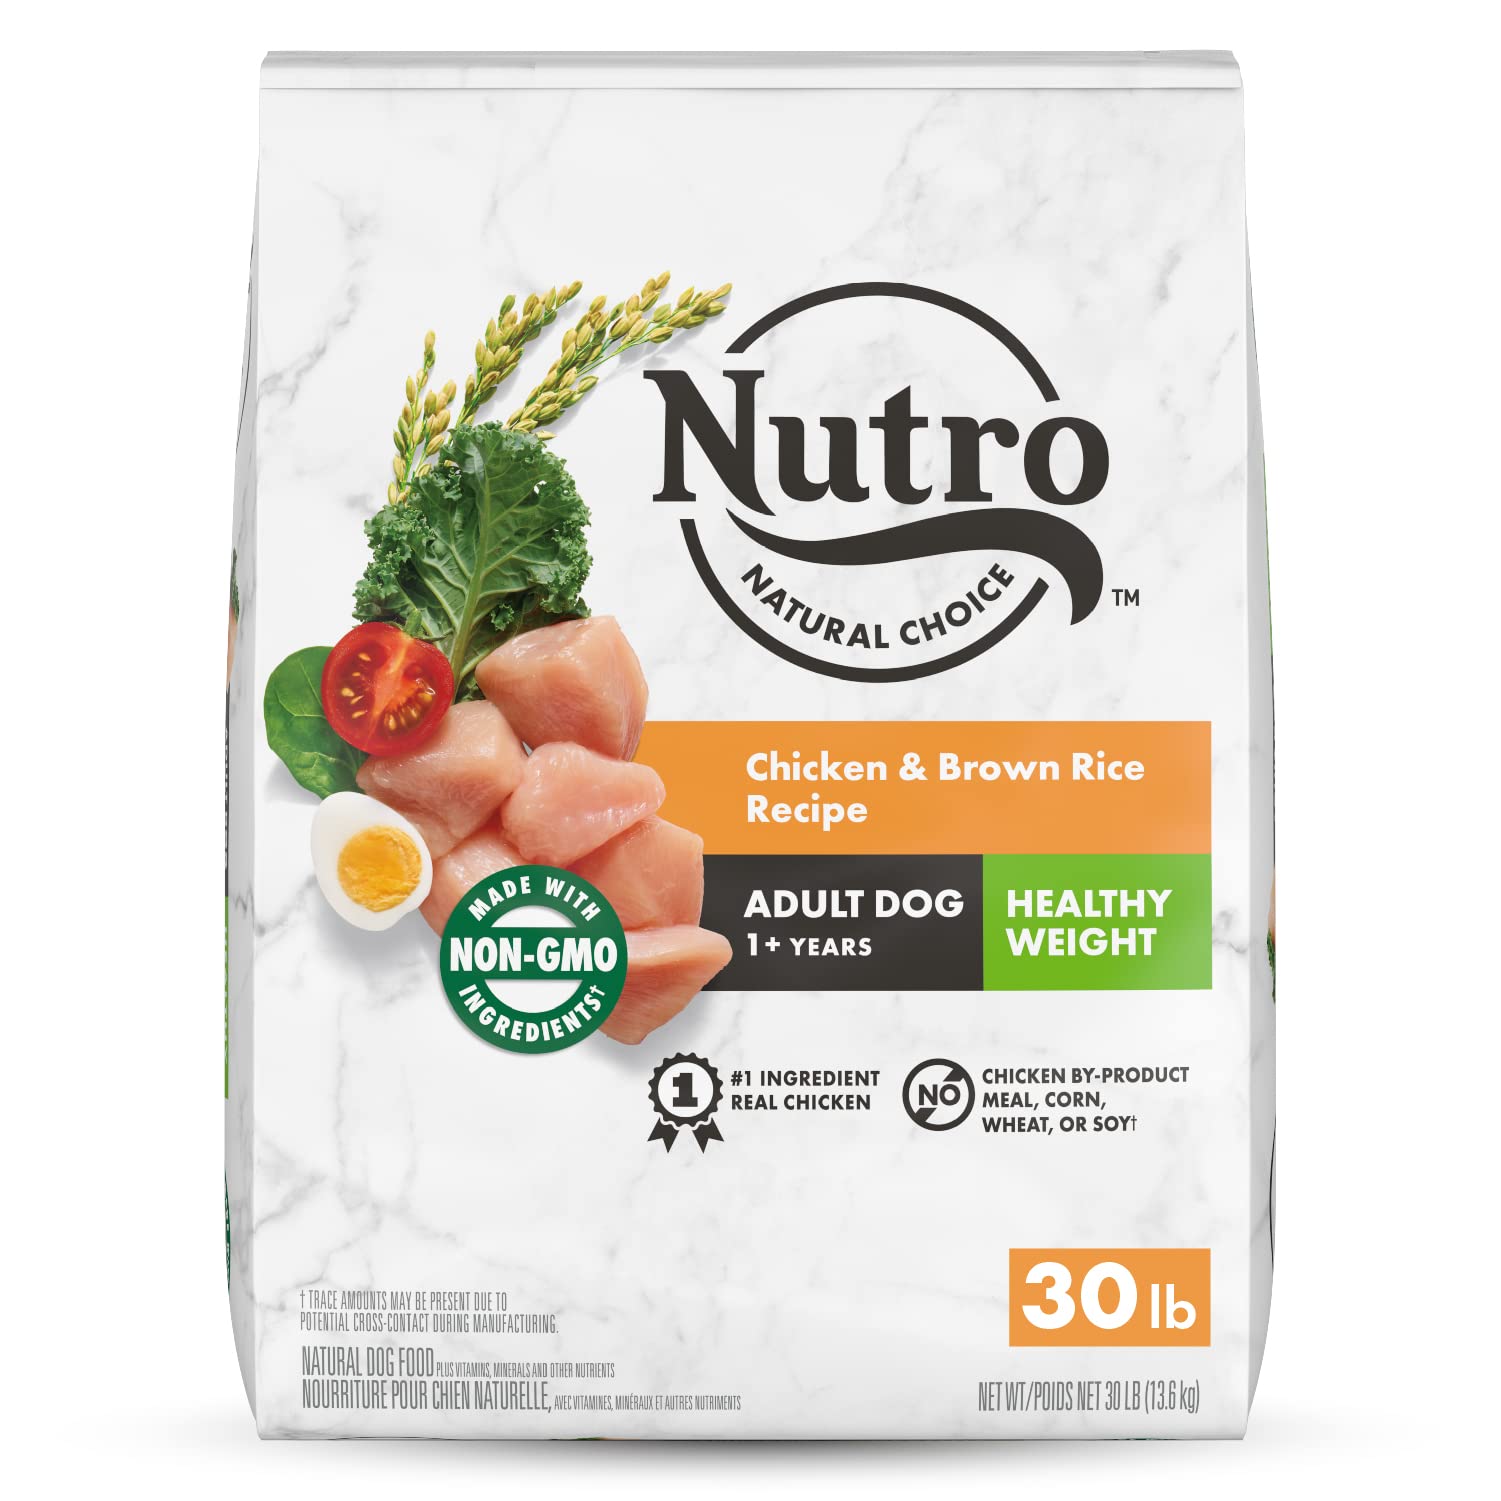 Nutro NATURAL CHOICE 成人健康体重干狗粮，所有品种尺寸，羊肉和鸡肉